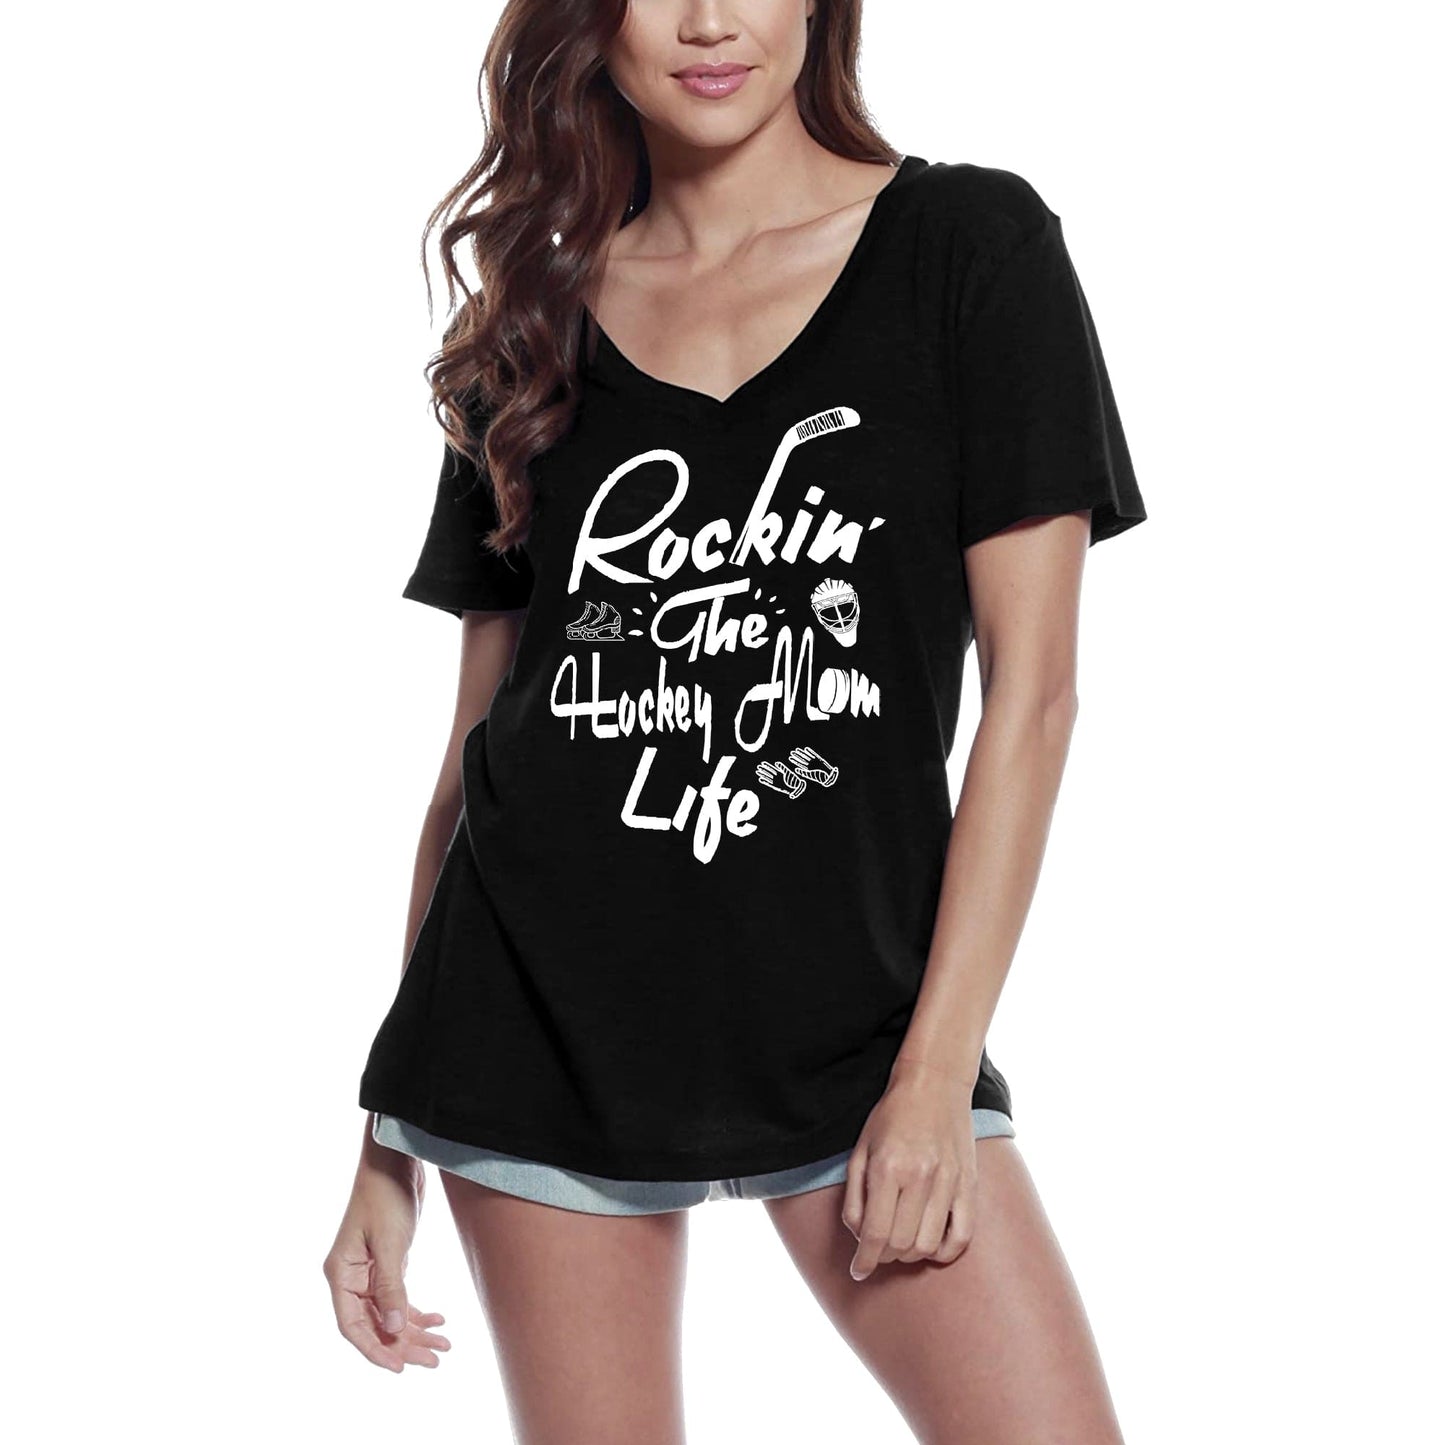 ULTRABASIC Women's T-Shirt Rockin the Hockey Mom Life - Funny Mother Tee Shirt